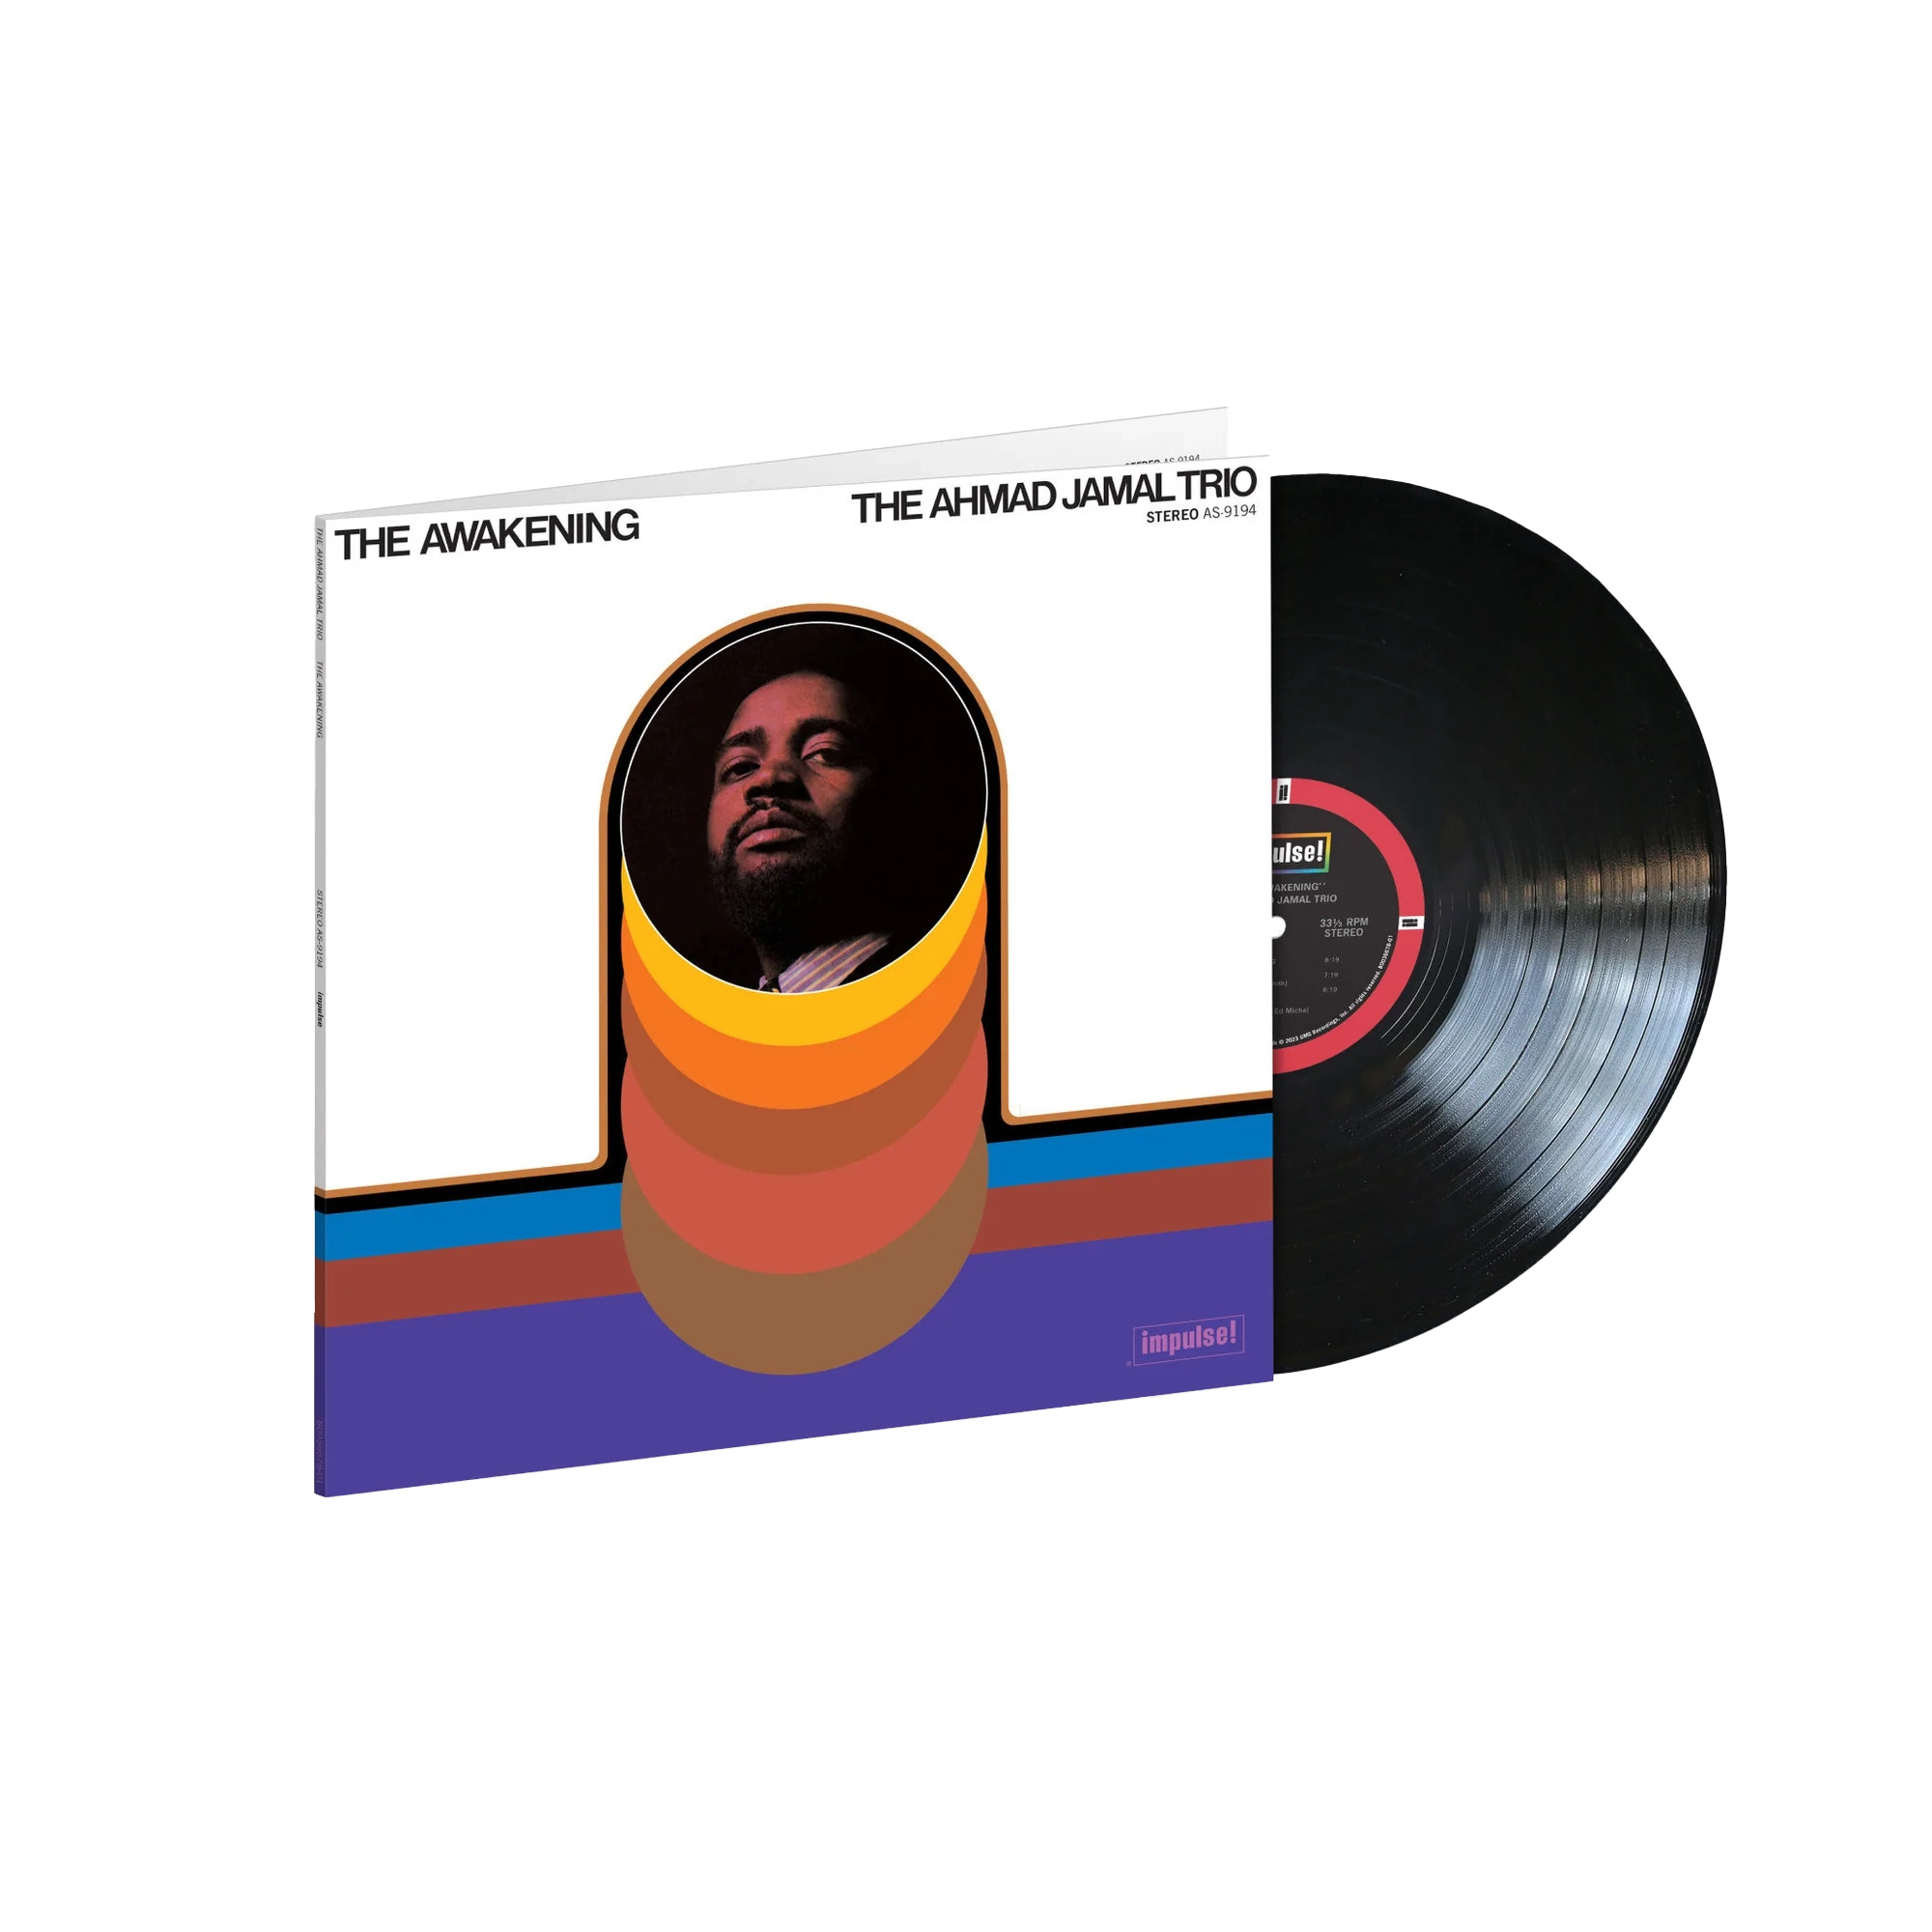 Ahmad Jamal Trio - The Awakening (Verve By Request): Vinyl LP